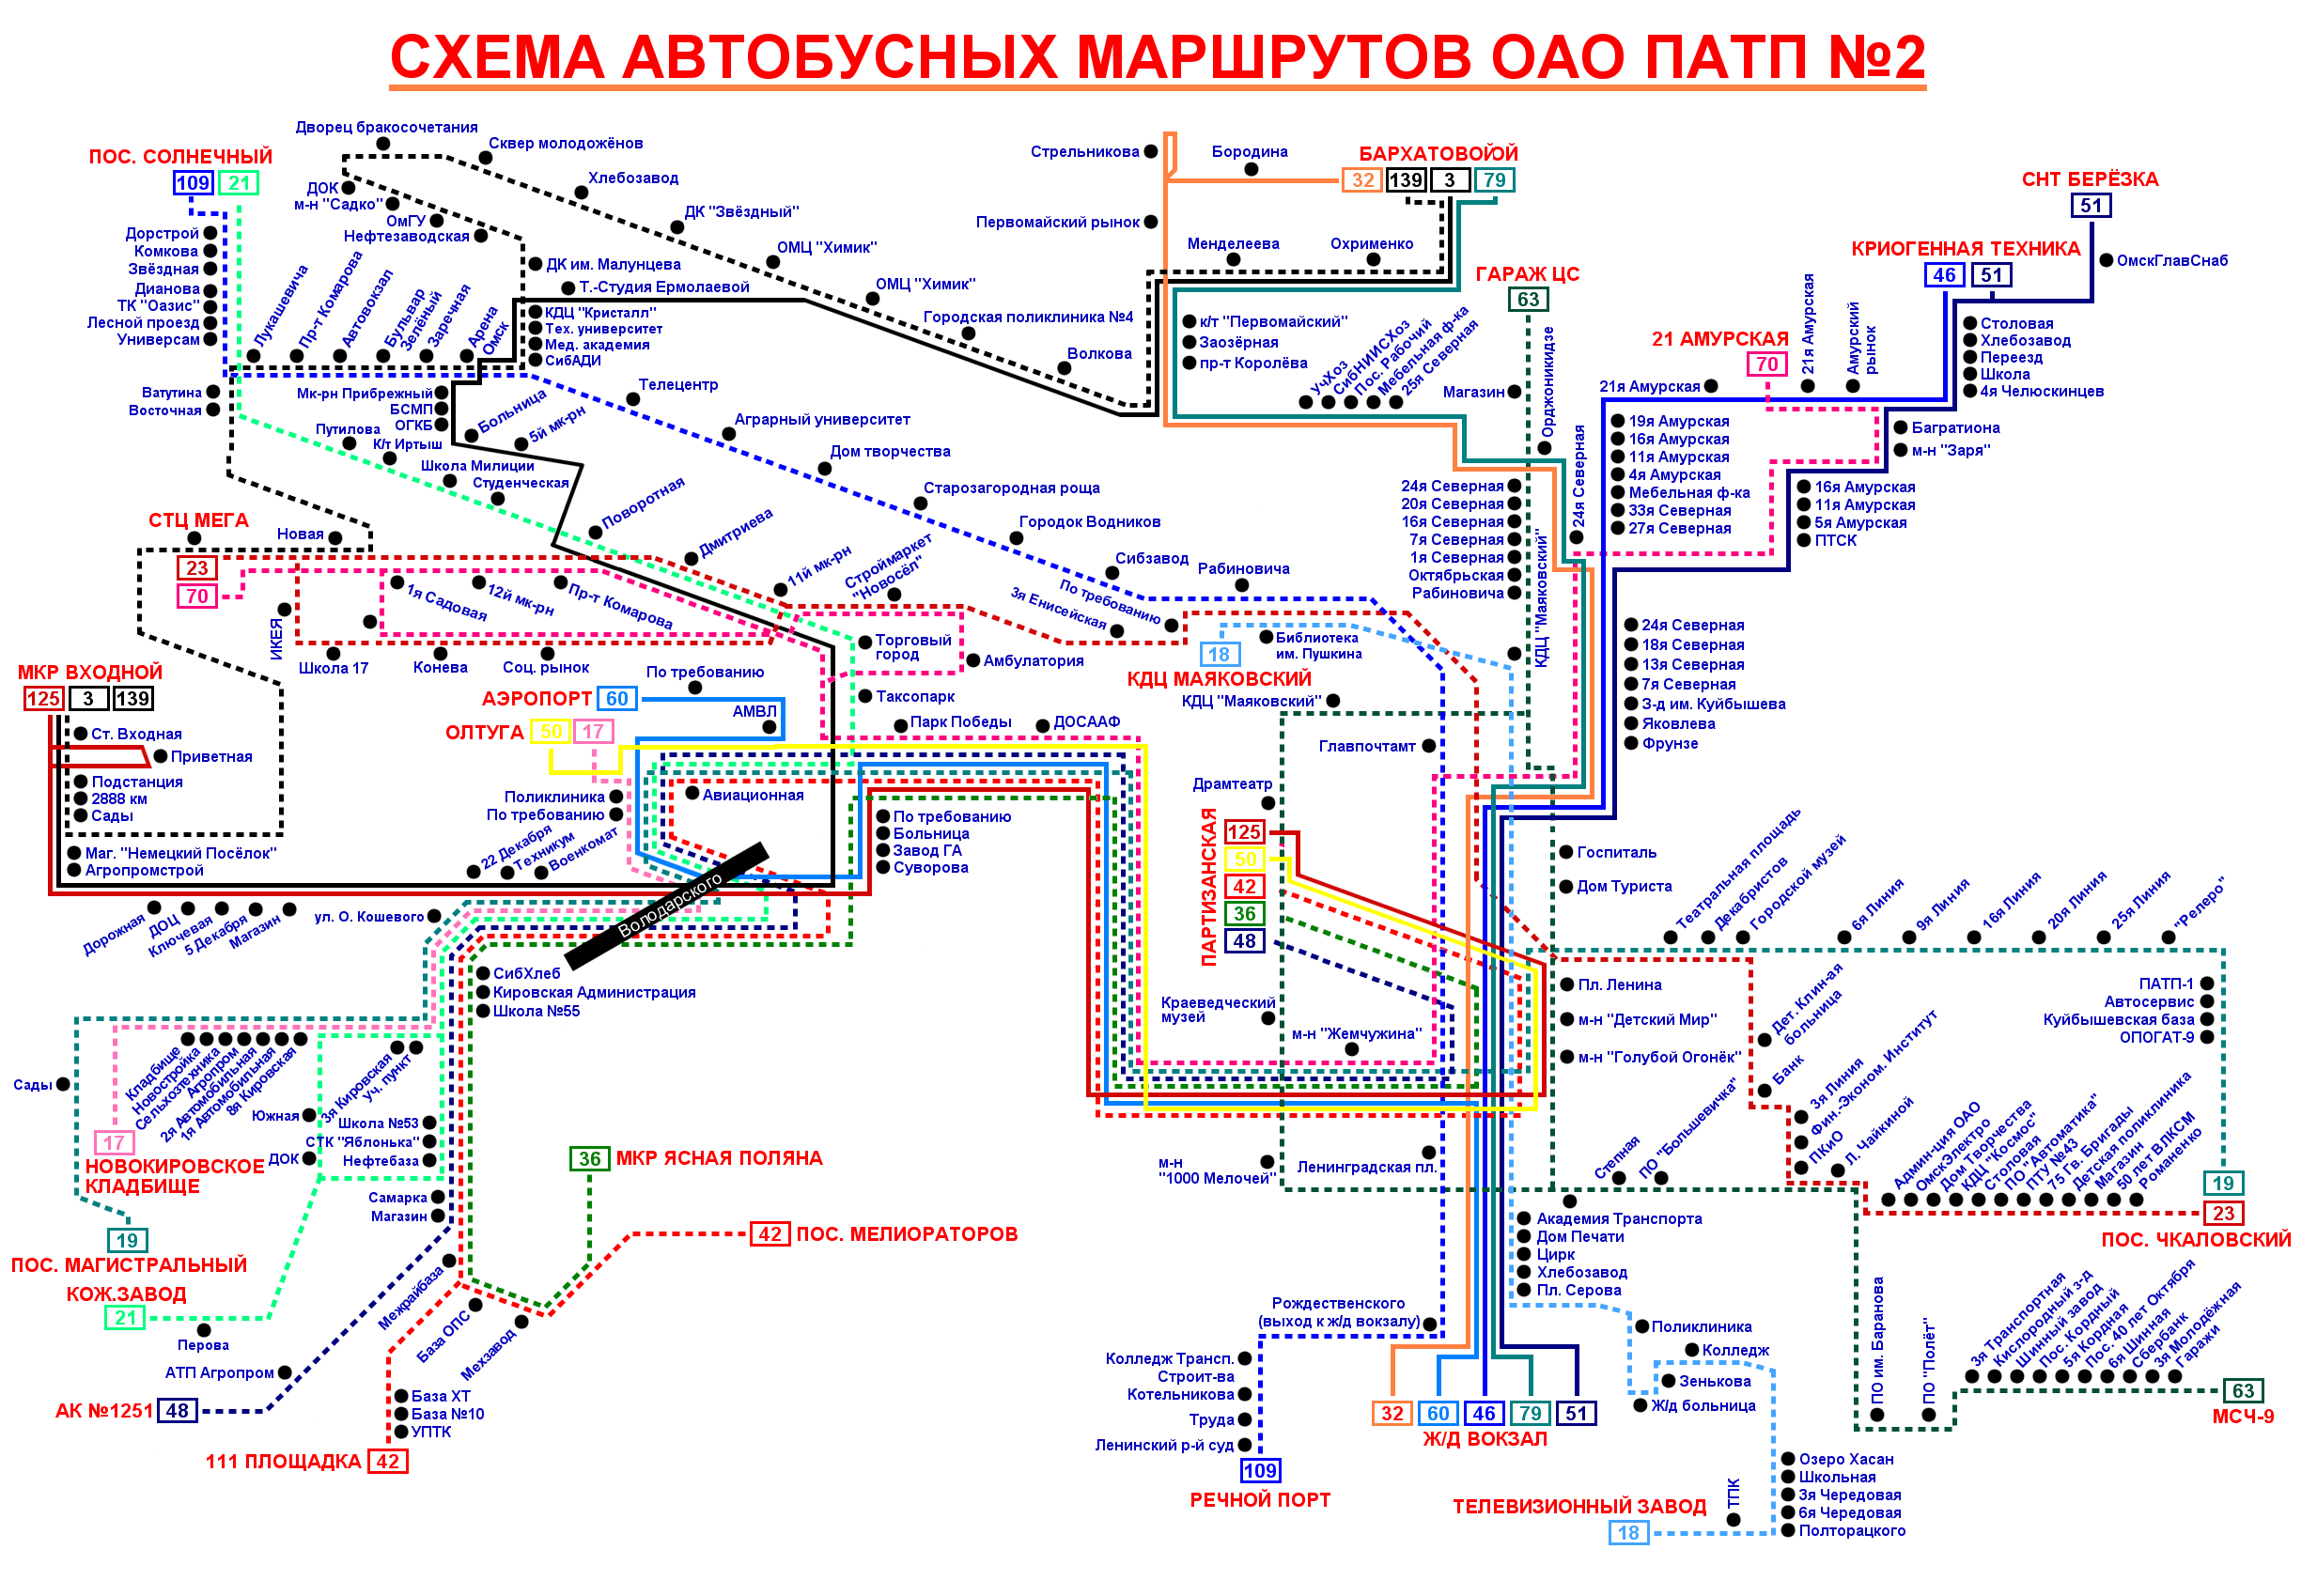 Omsk region — Maps